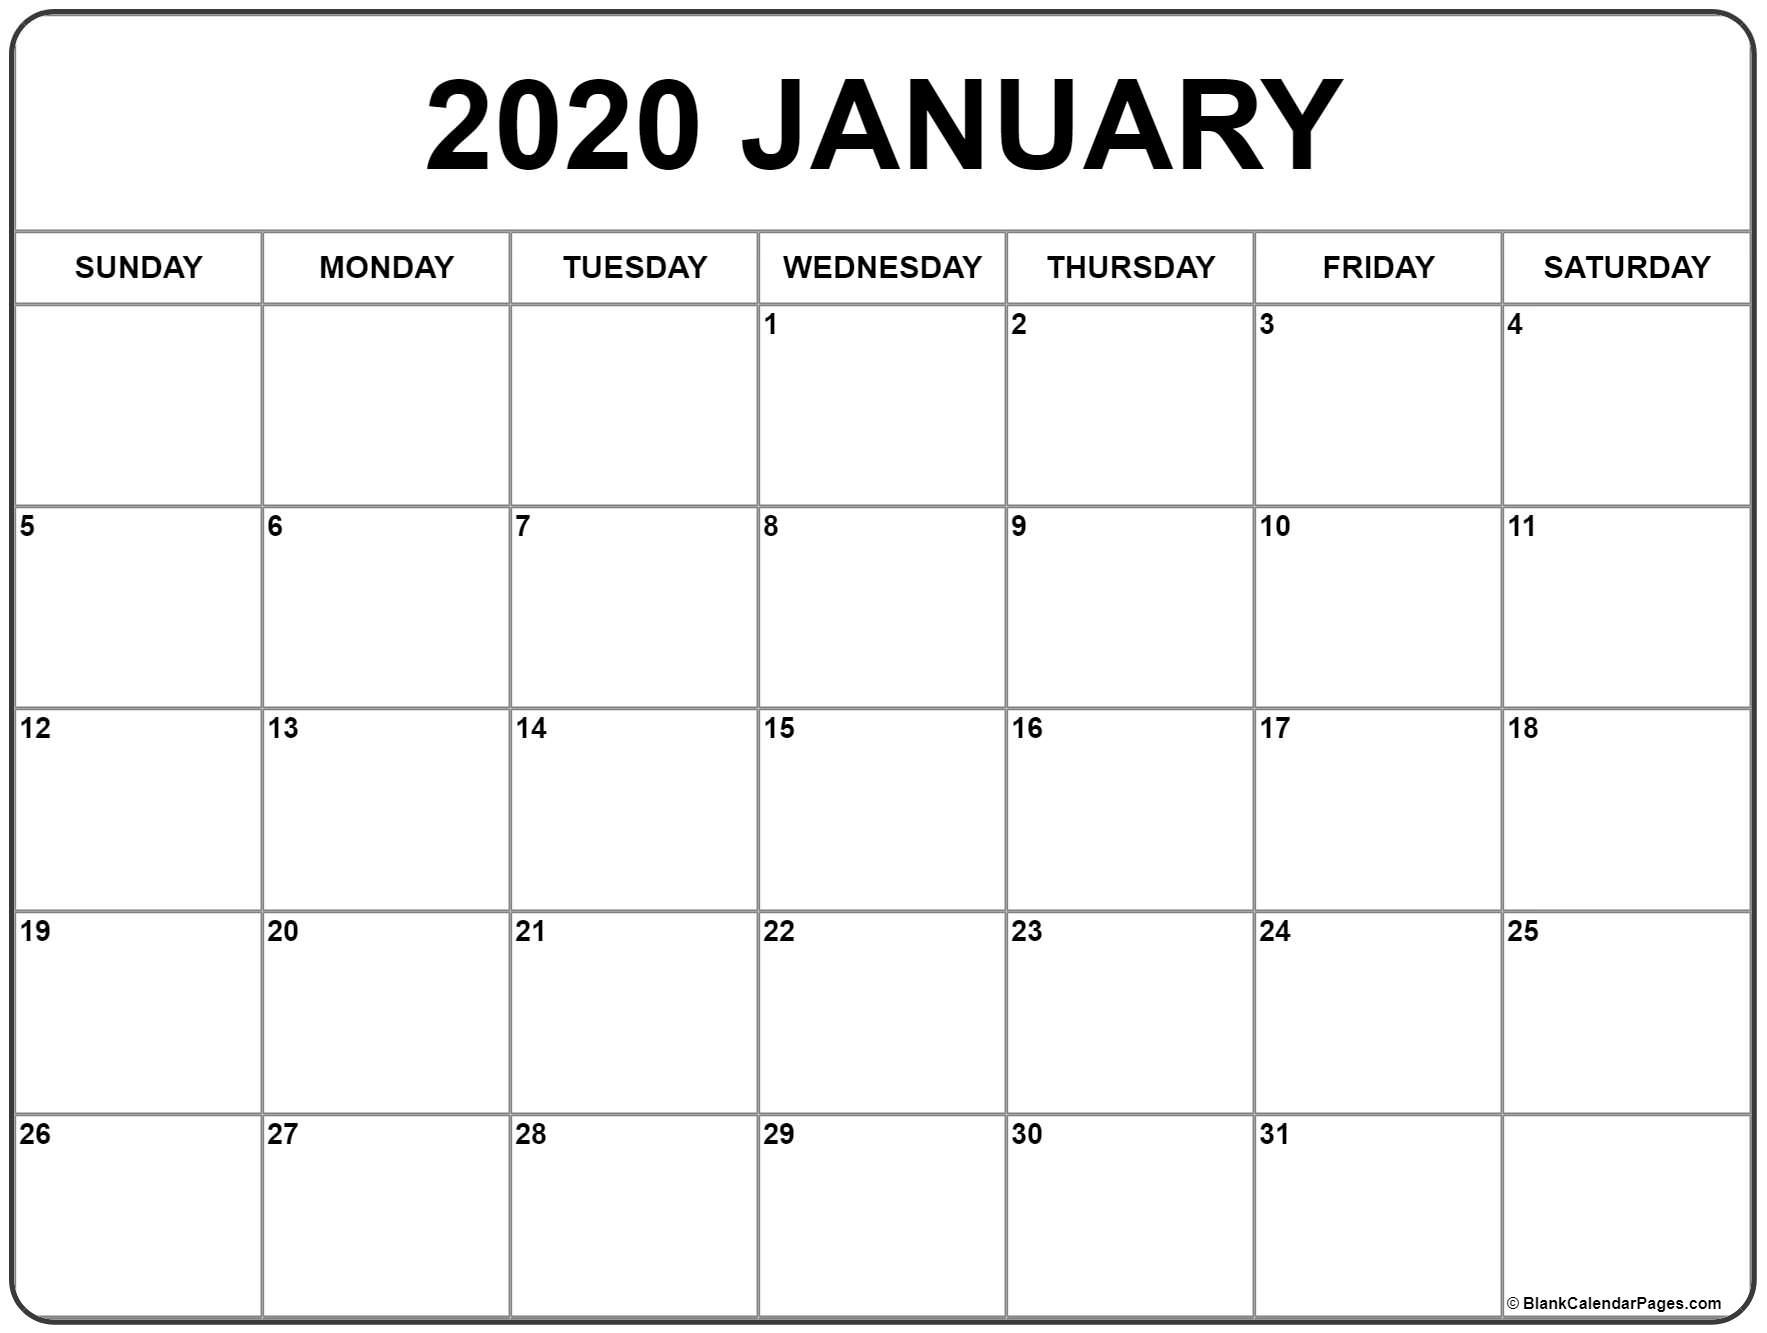 January 2020 Calendar | Free Printable Monthly Calendars regarding Printable Fill In Calendar For 2020